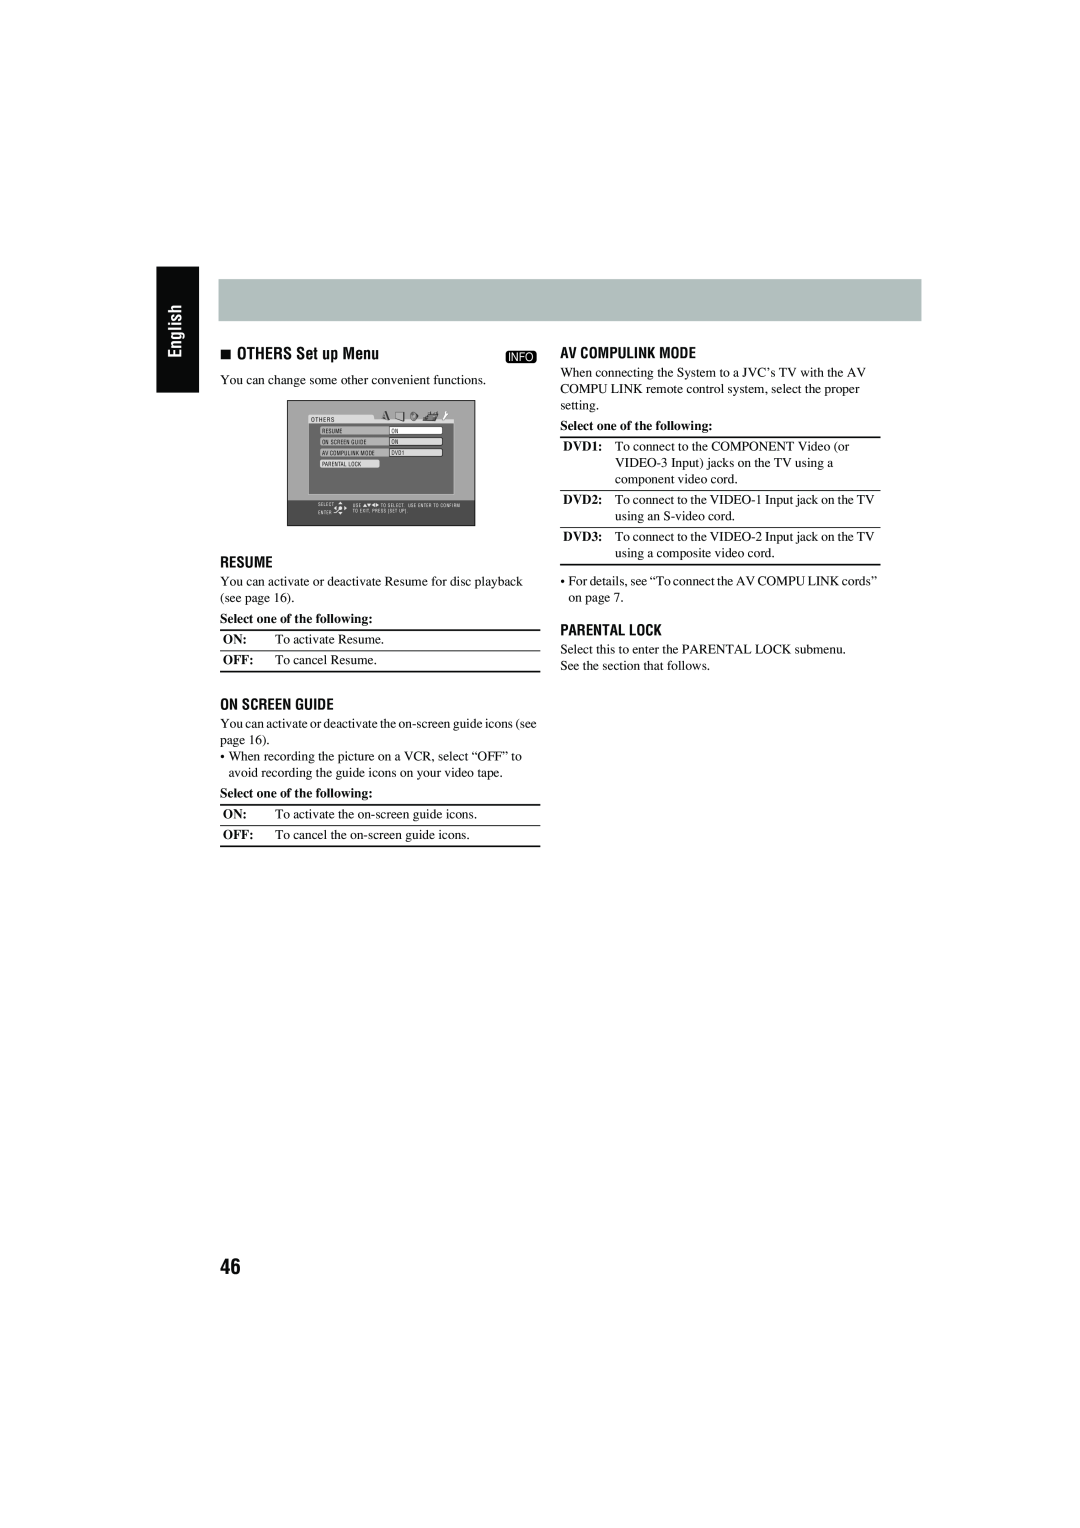 JVC CA-MXJD8 manual English, OTHERS Set up Menu, Resume, On Screen Guide, Av Compulink Mode, Parental Lock 